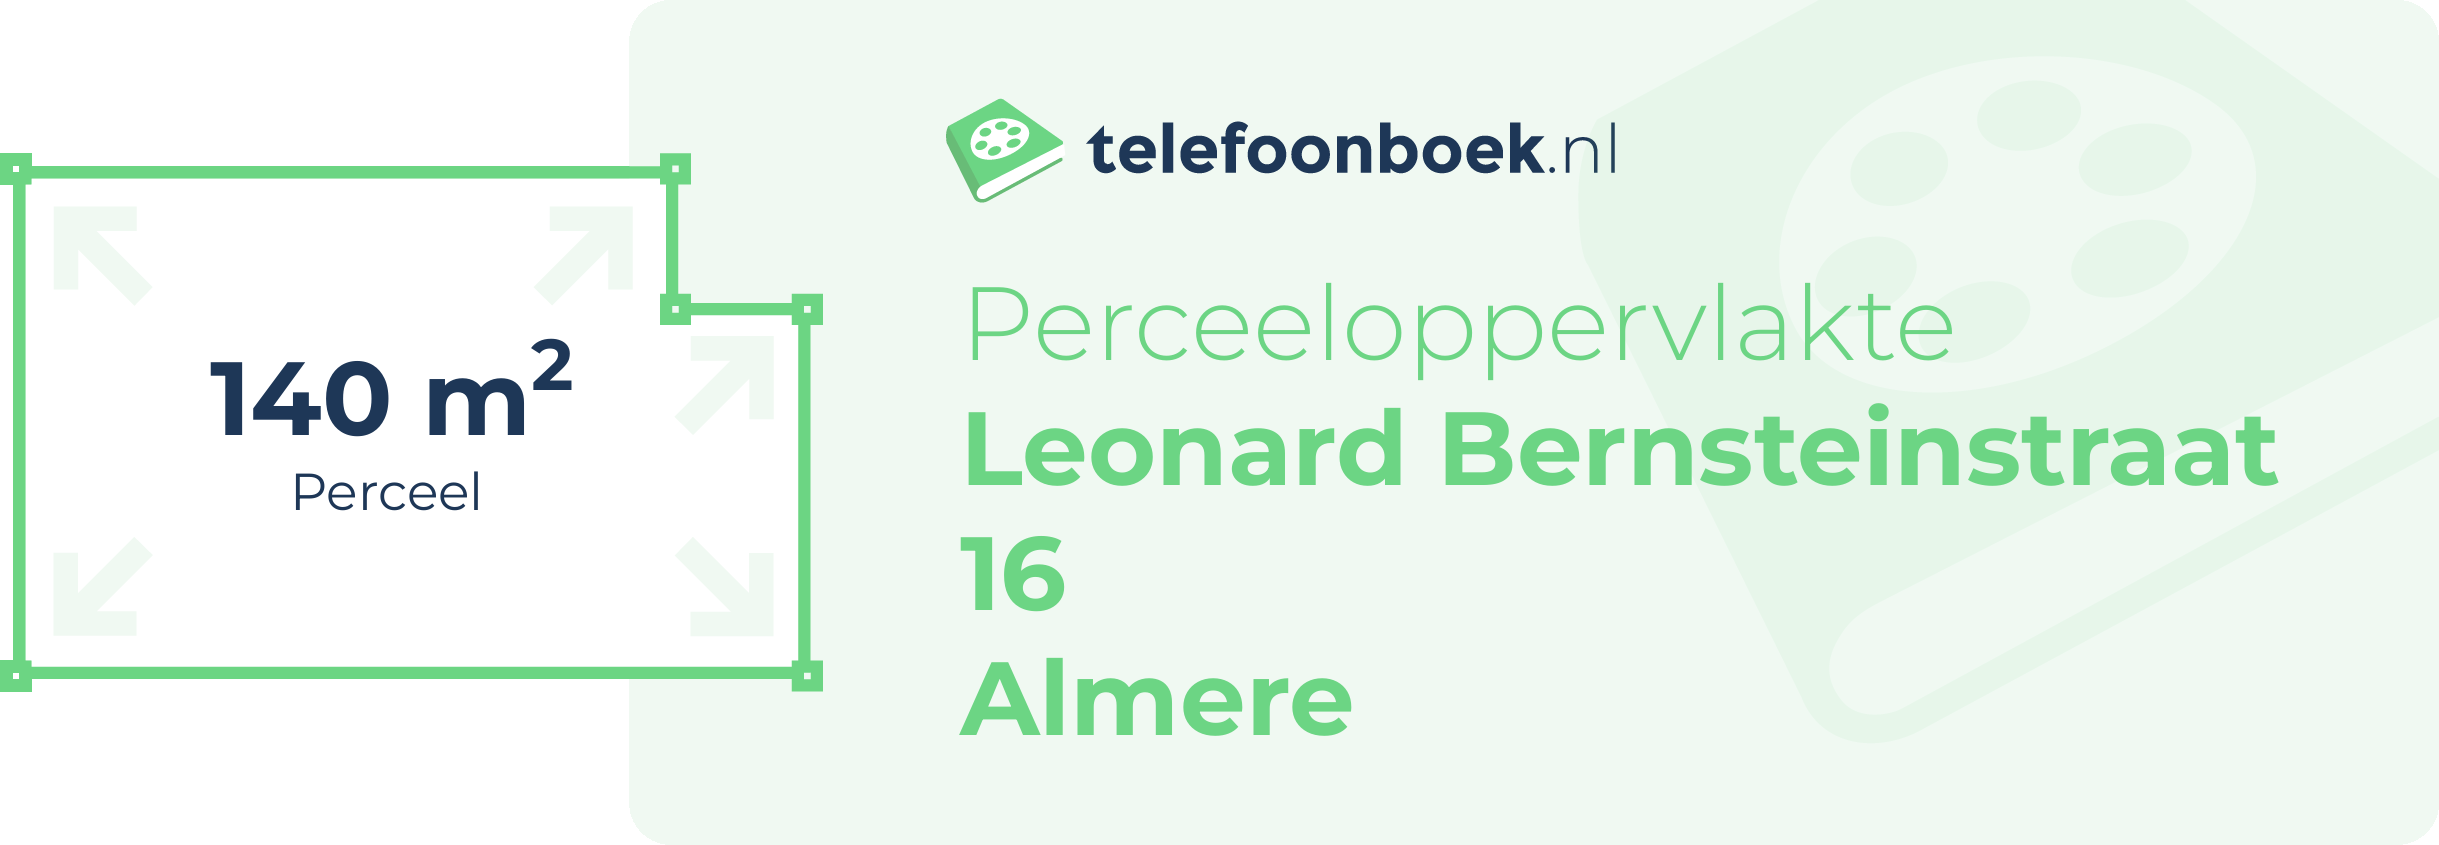 Perceeloppervlakte Leonard Bernsteinstraat 16 Almere